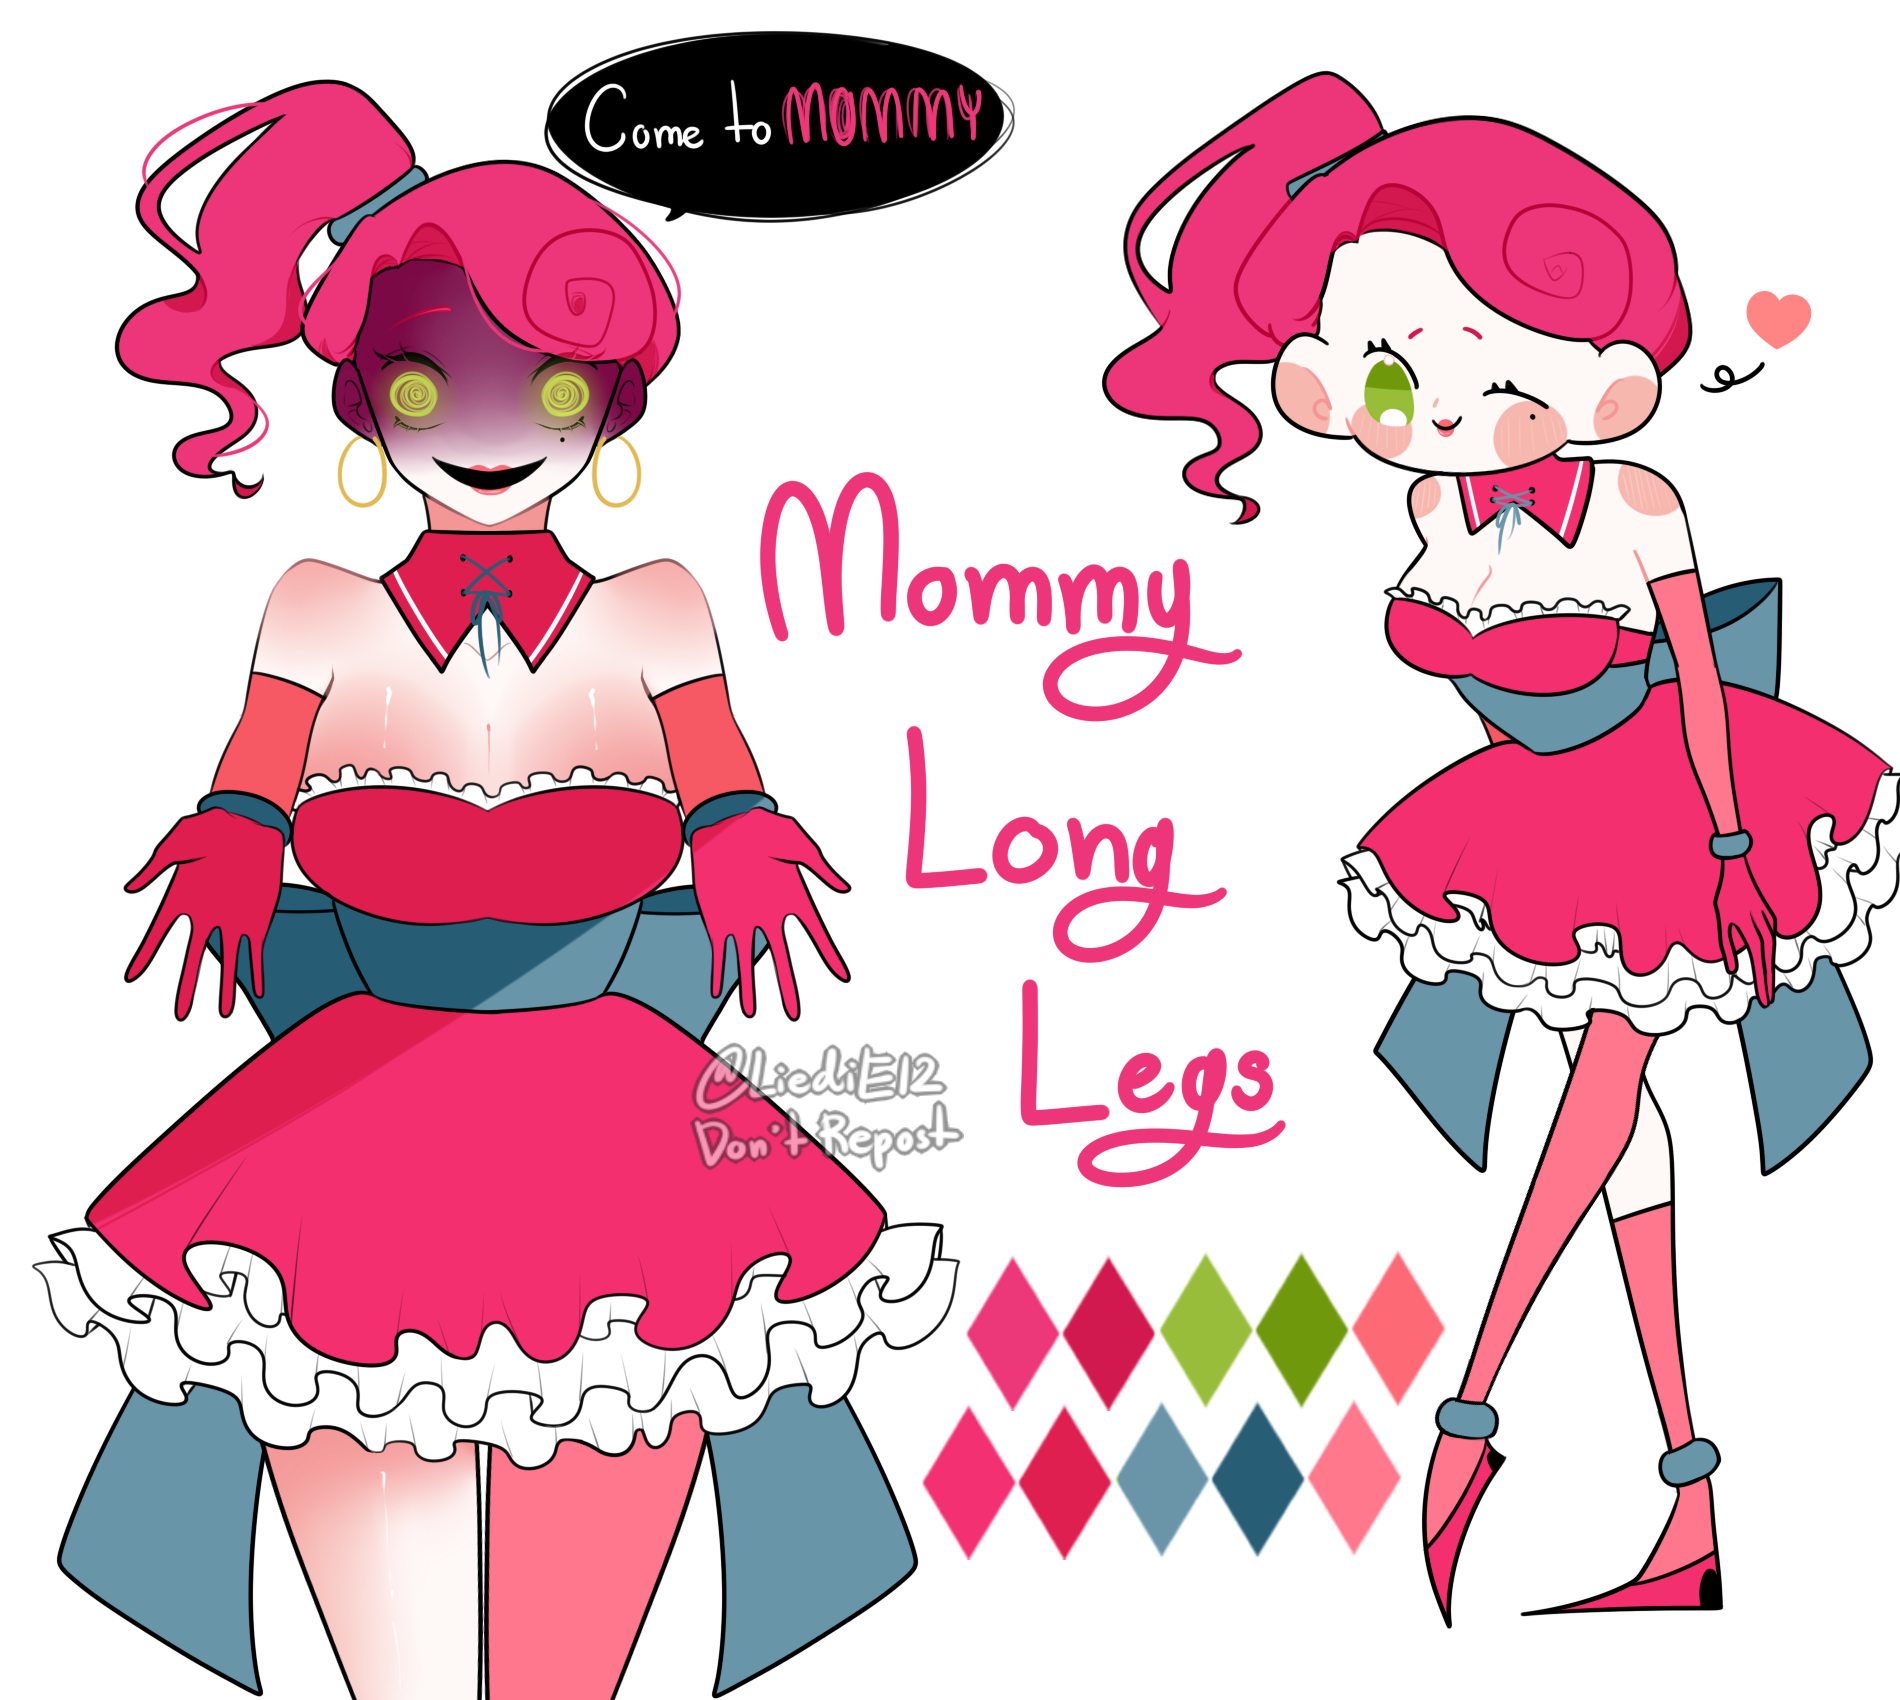 Mommy long legs FANART 🕷🎀 : r/PoppyPlaytime